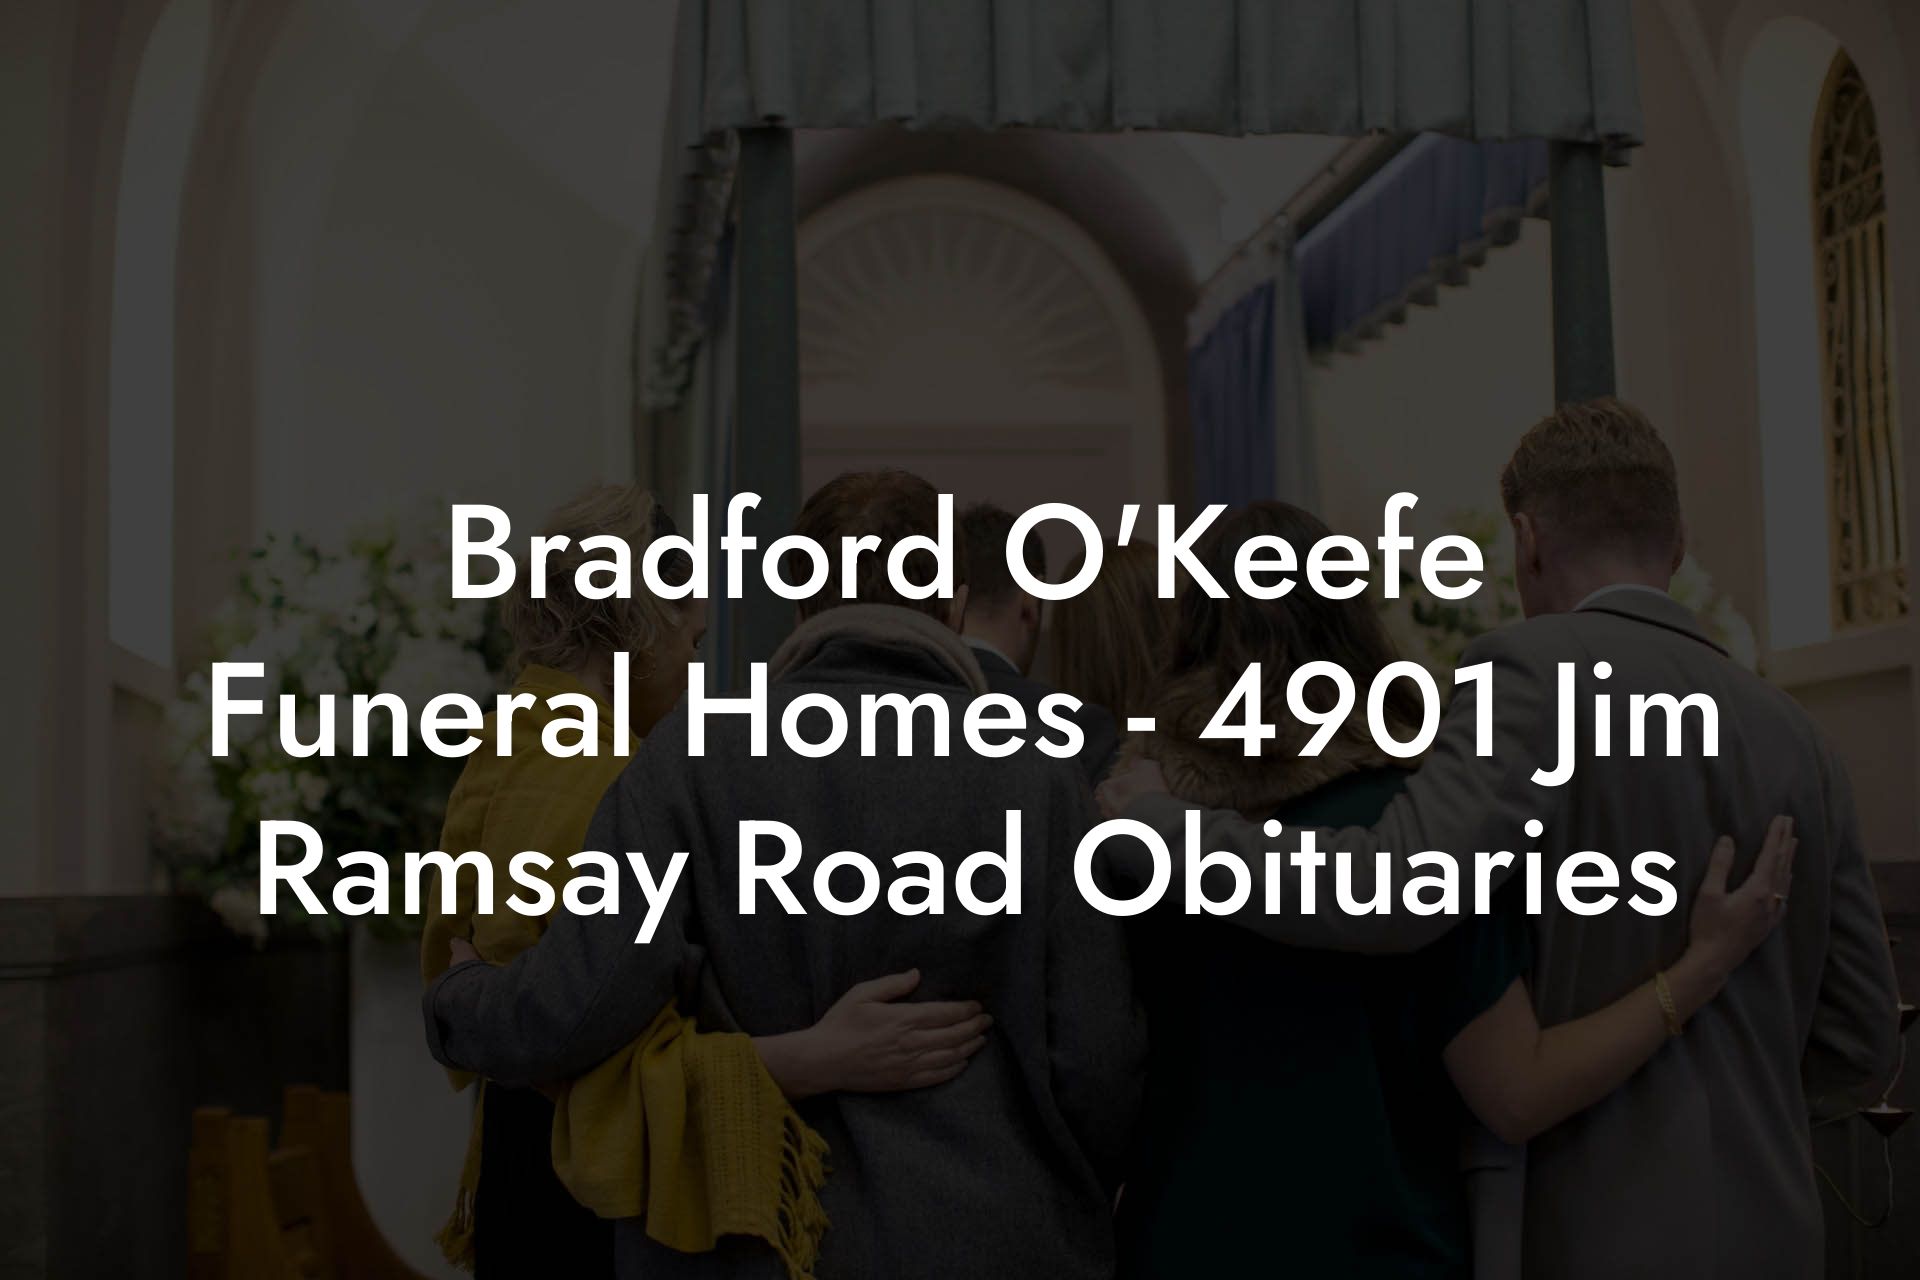 Bradford O'Keefe Funeral Homes - 4901 Jim Ramsay Road Obituaries